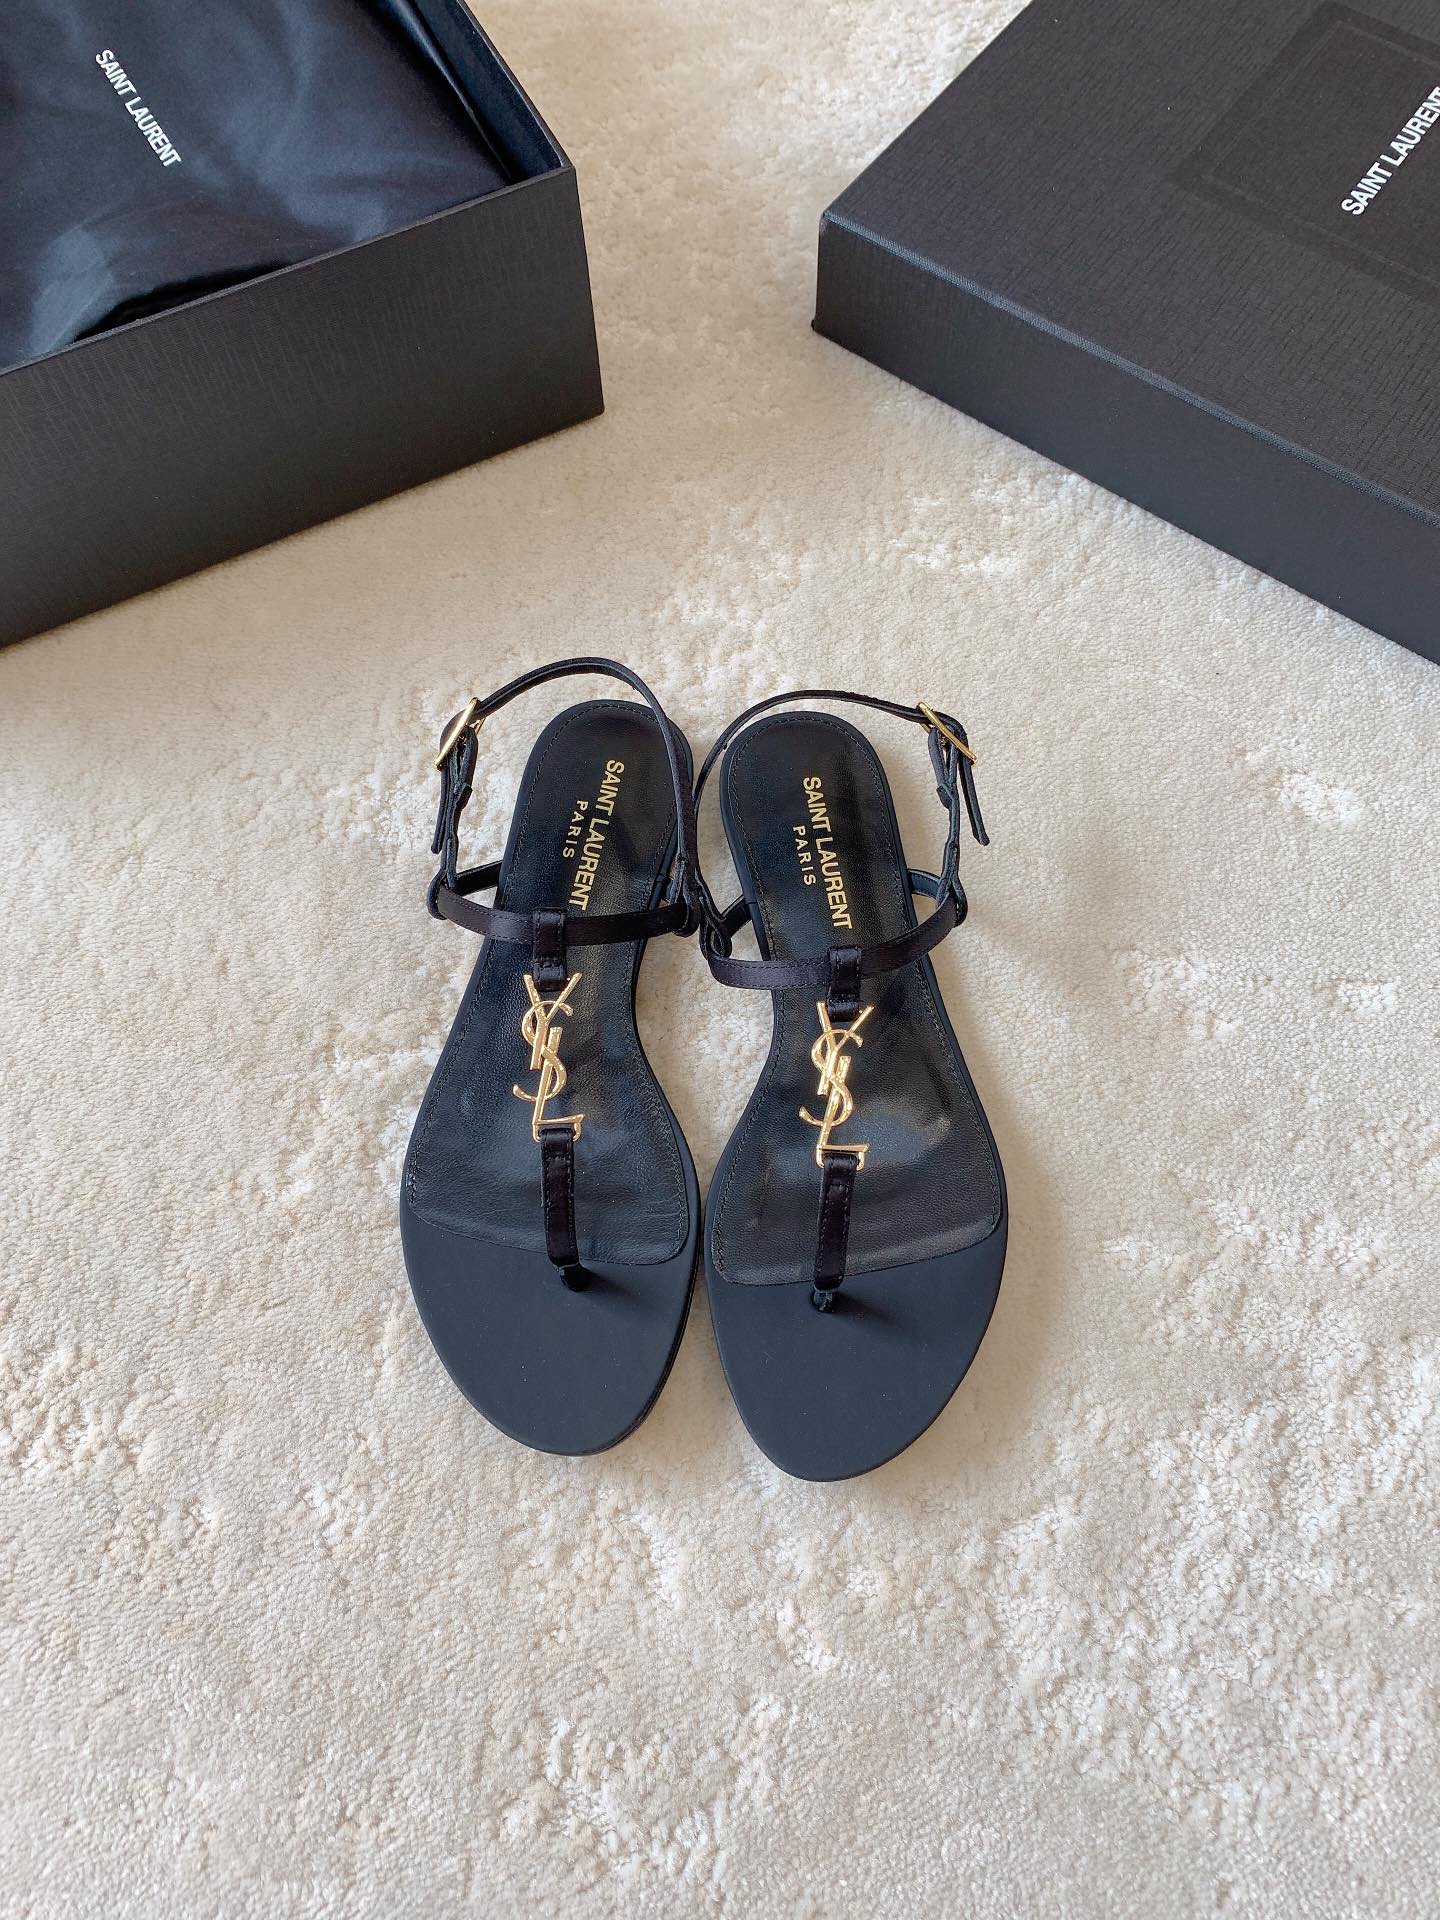 Yves Saint Laurent Zapatos Sandalias Negro Hardware de oro Dermis Laca Piel oveja Seda